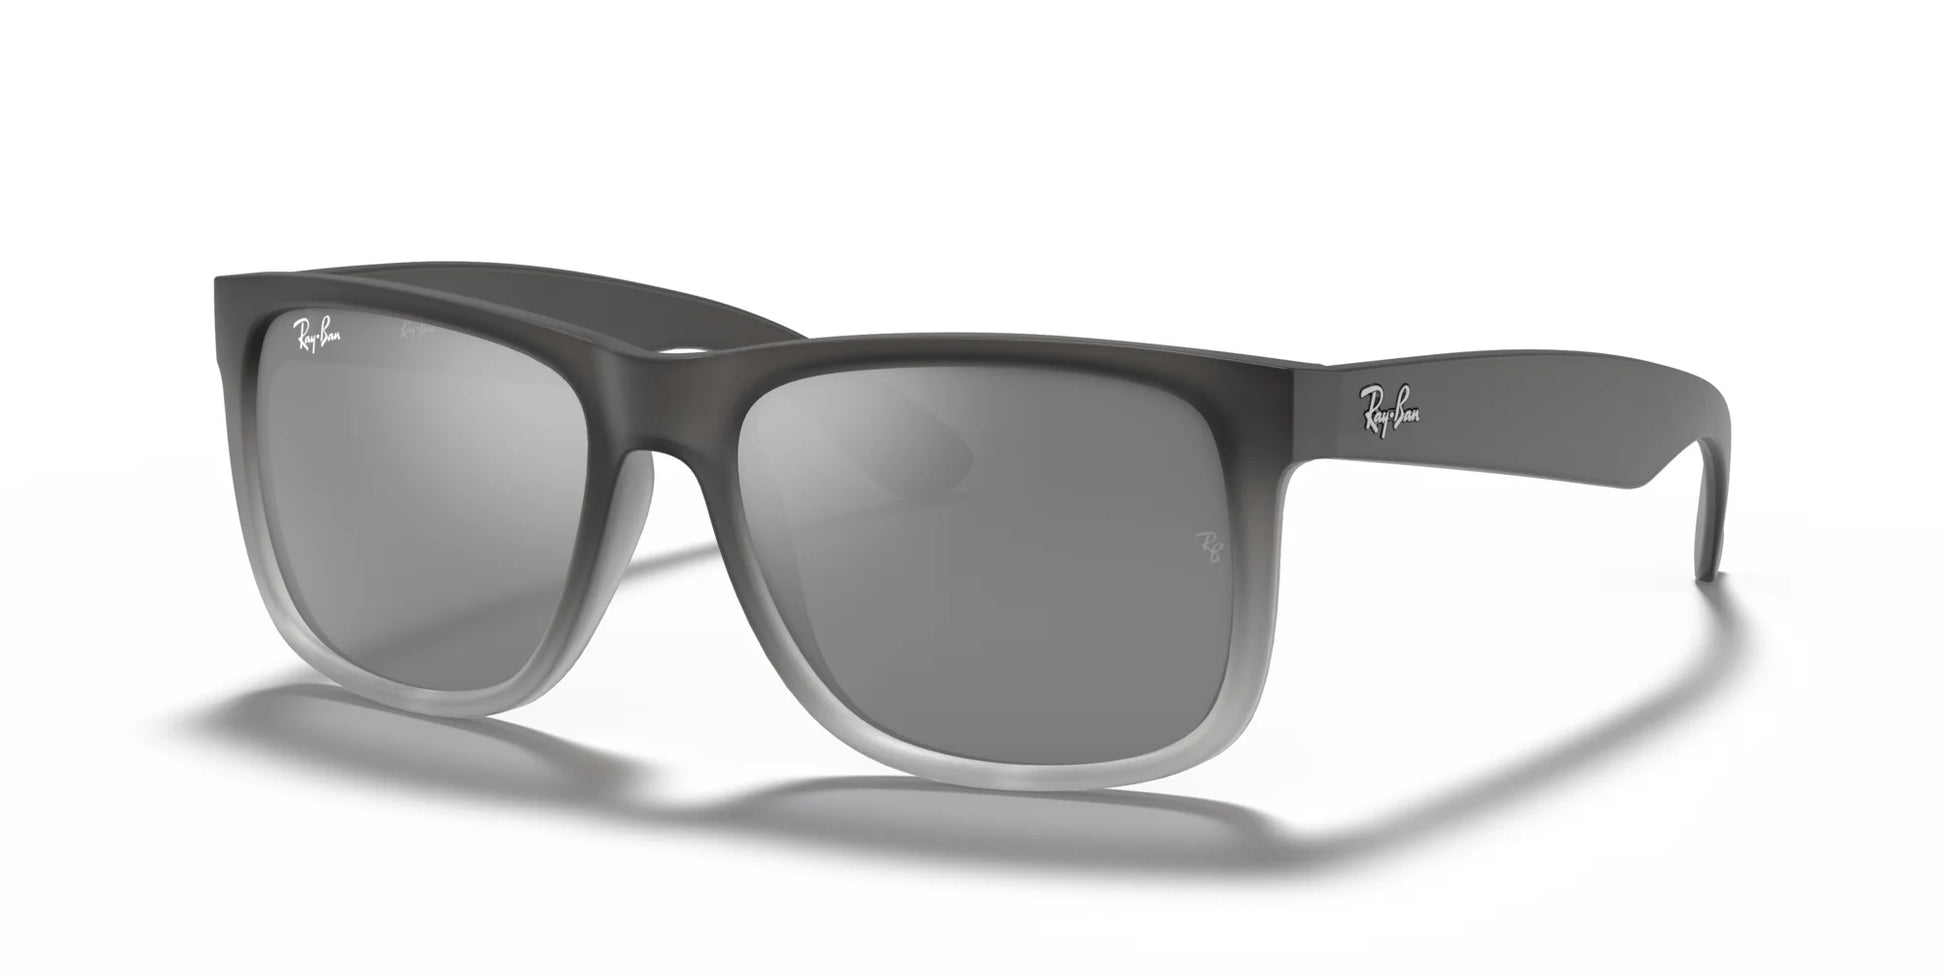 Ray-Ban JUSTIN RB4165 Sunglasses Grey / Grey Gradient